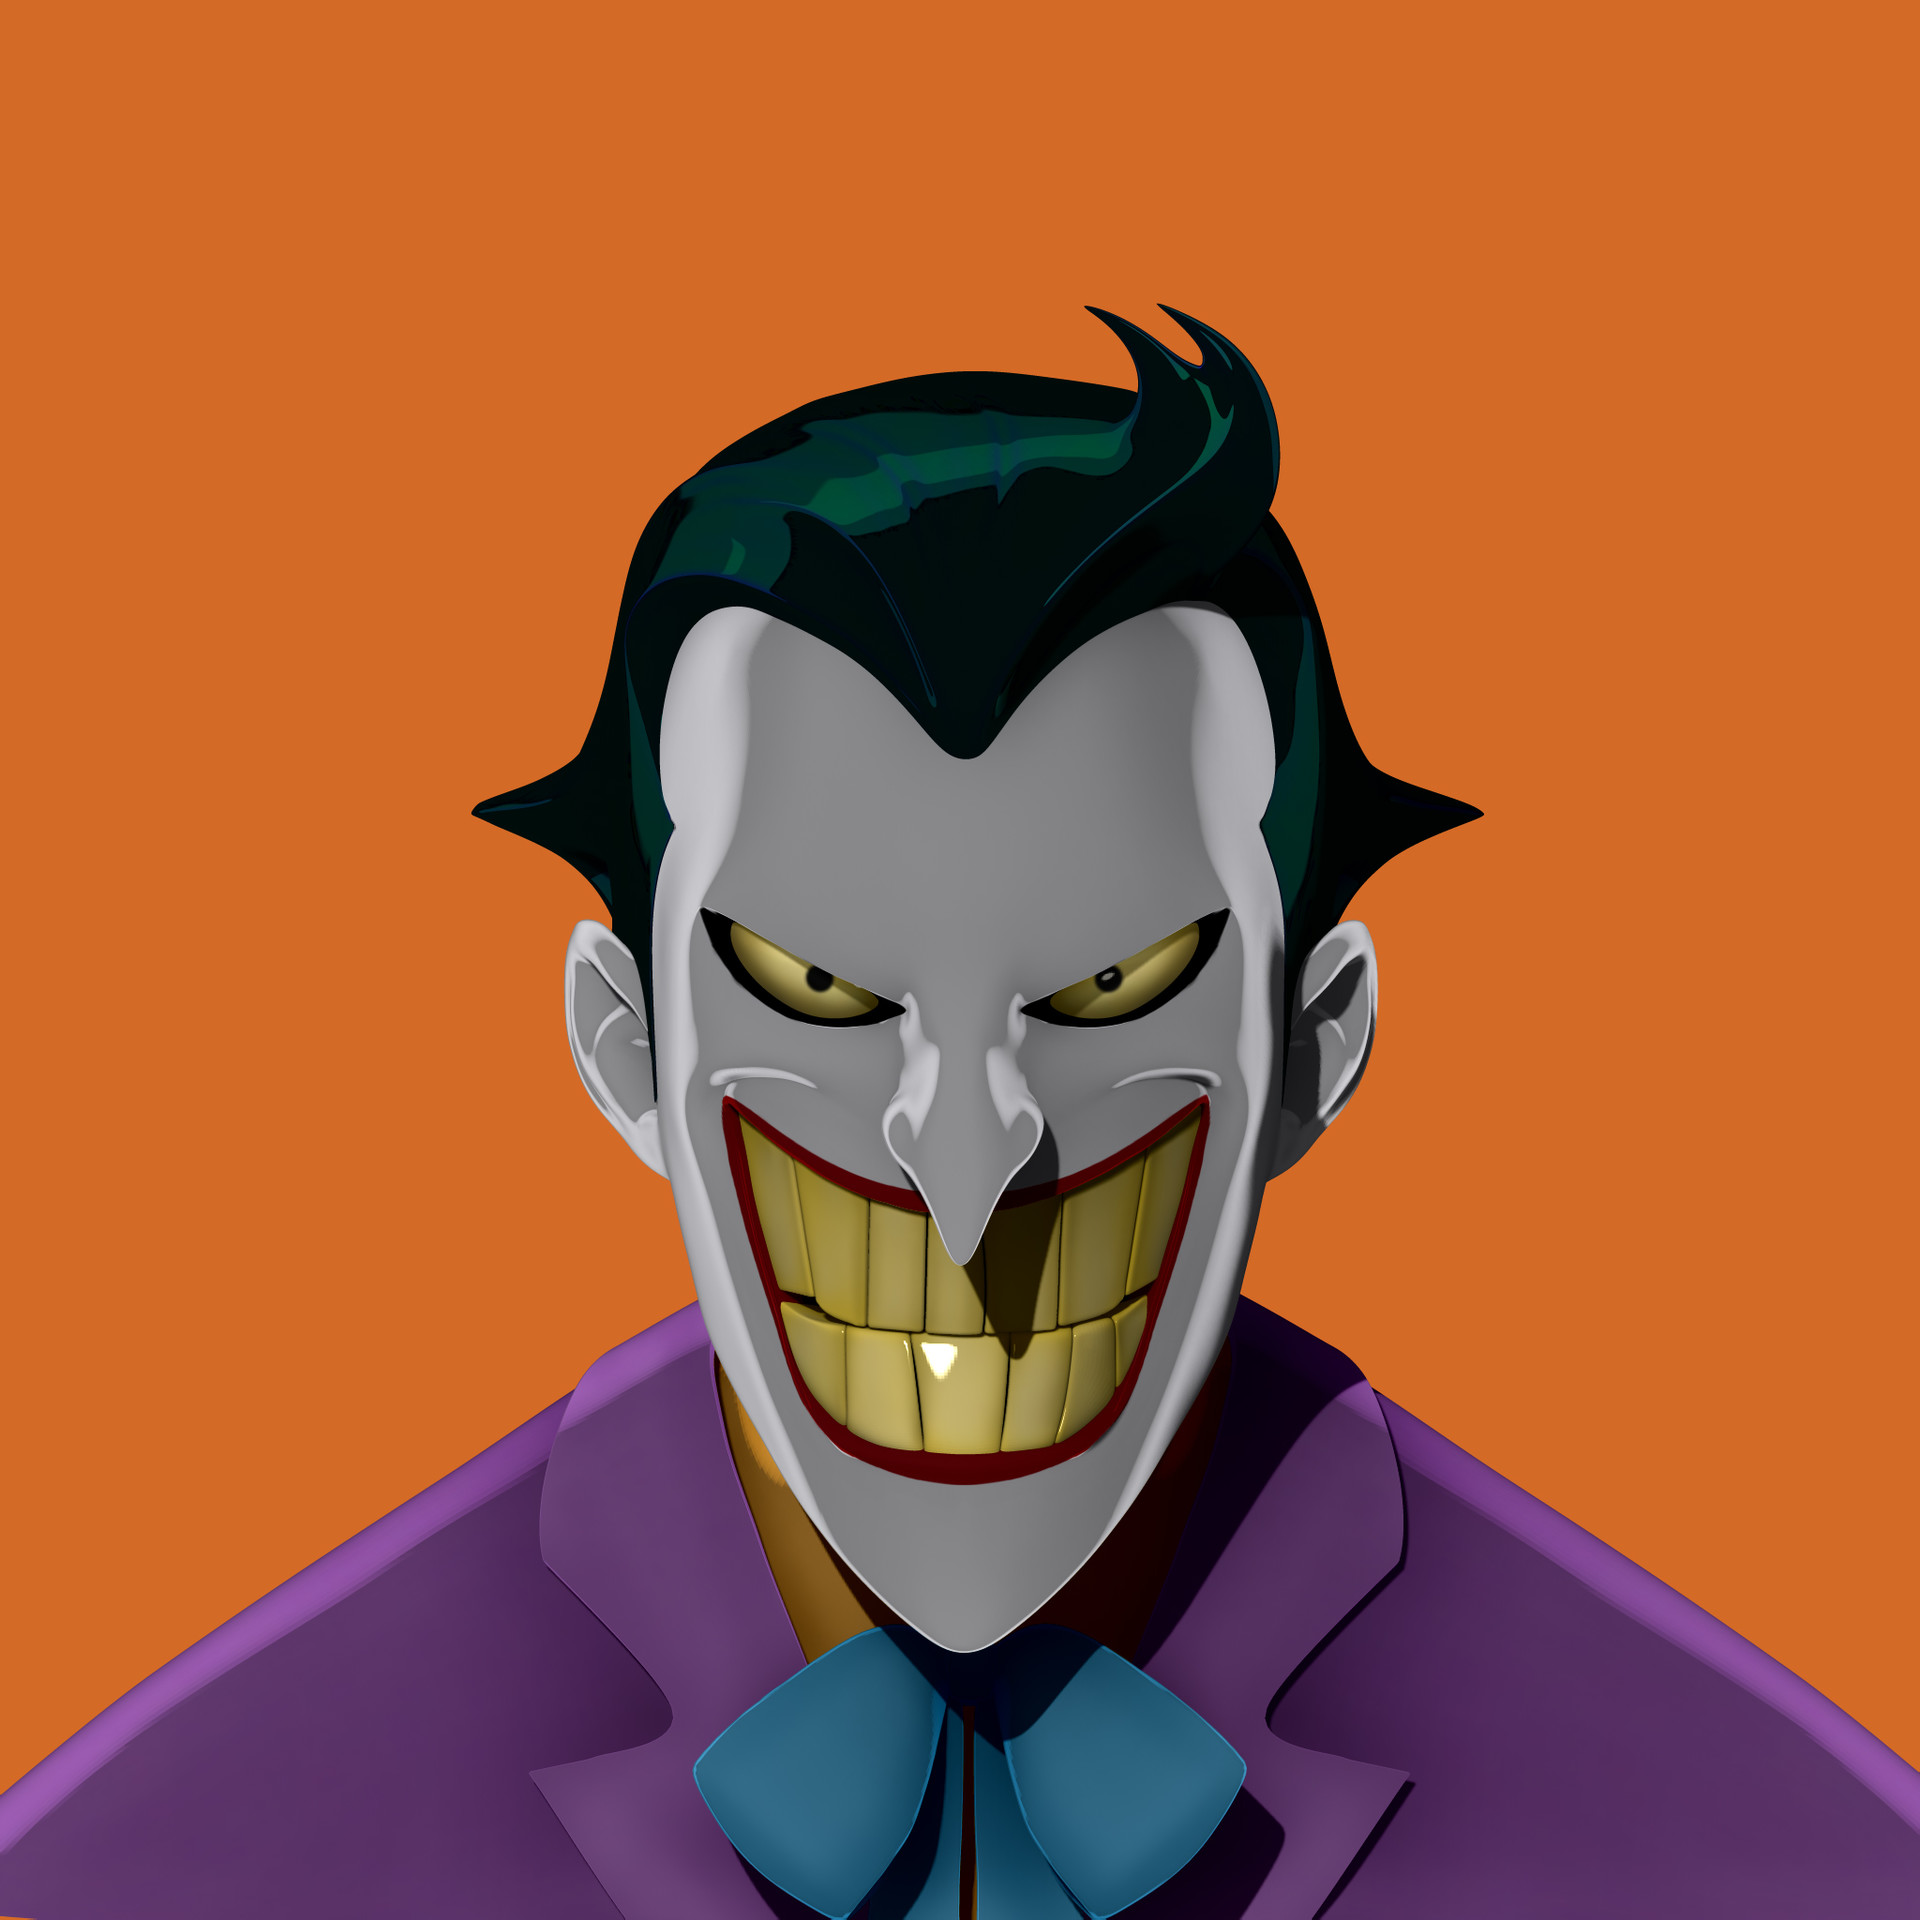 ArtStation - Joker Animated